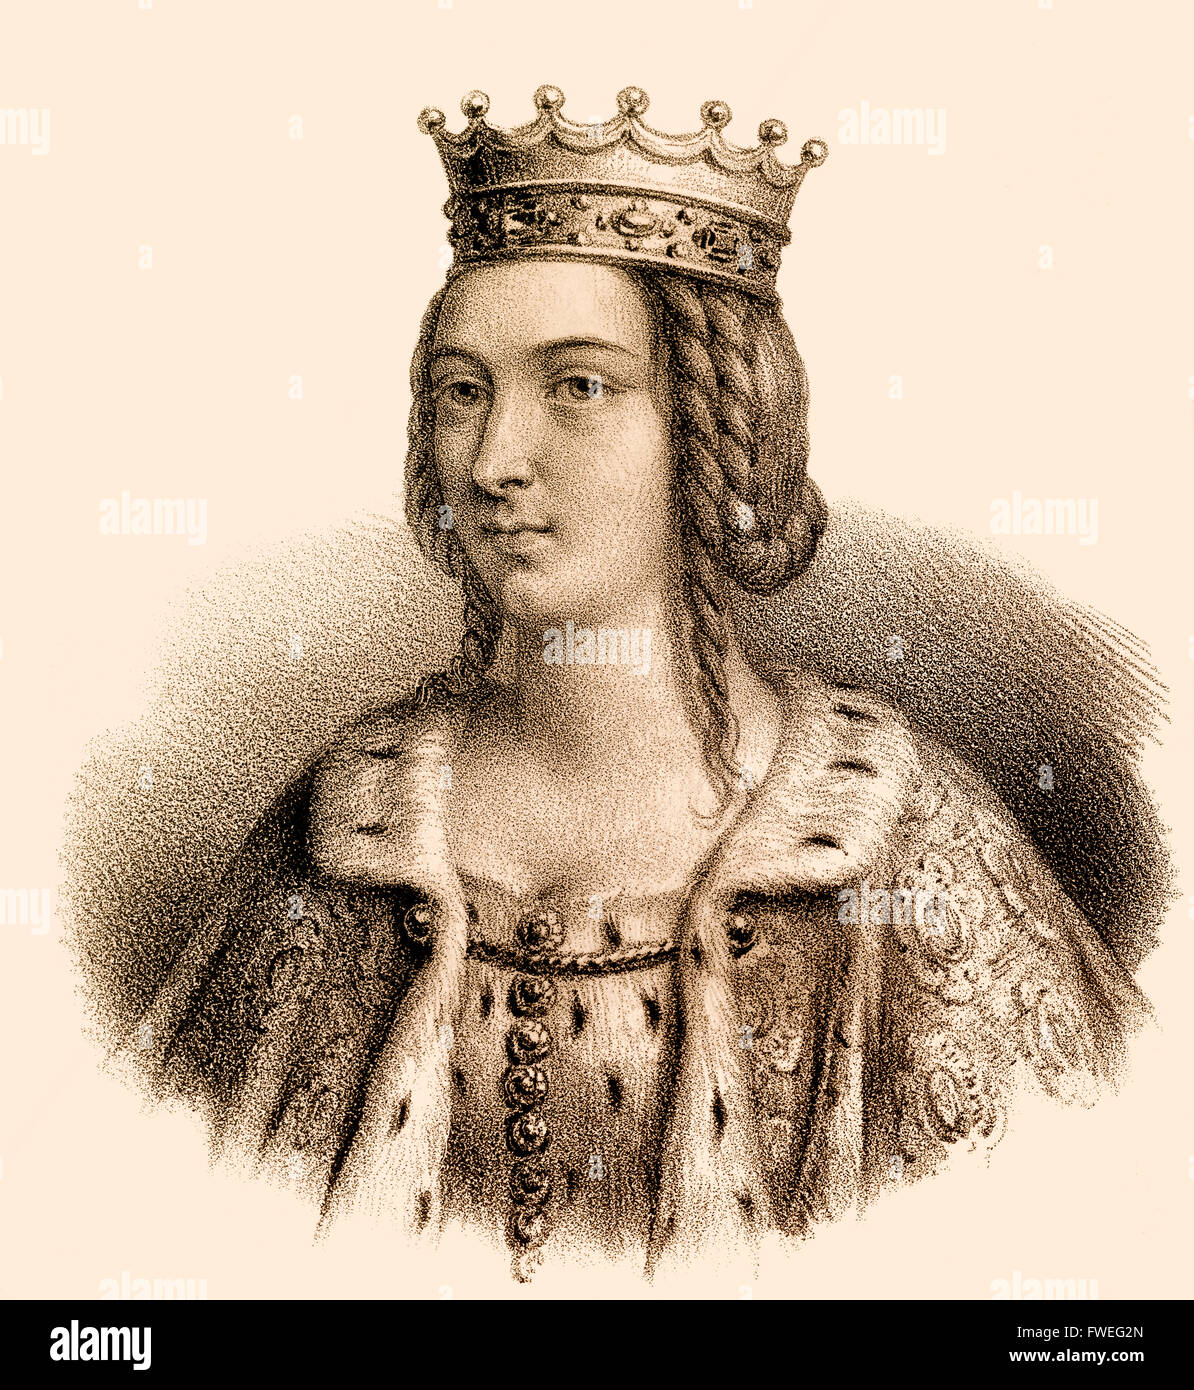 Adbelahide, Adele, Adelheid, Adelaide of Aquitaine, or Adelaide of Poitiers, c. 945-c. 1004, queen of France, wife to Hugh Capet Stock Photo